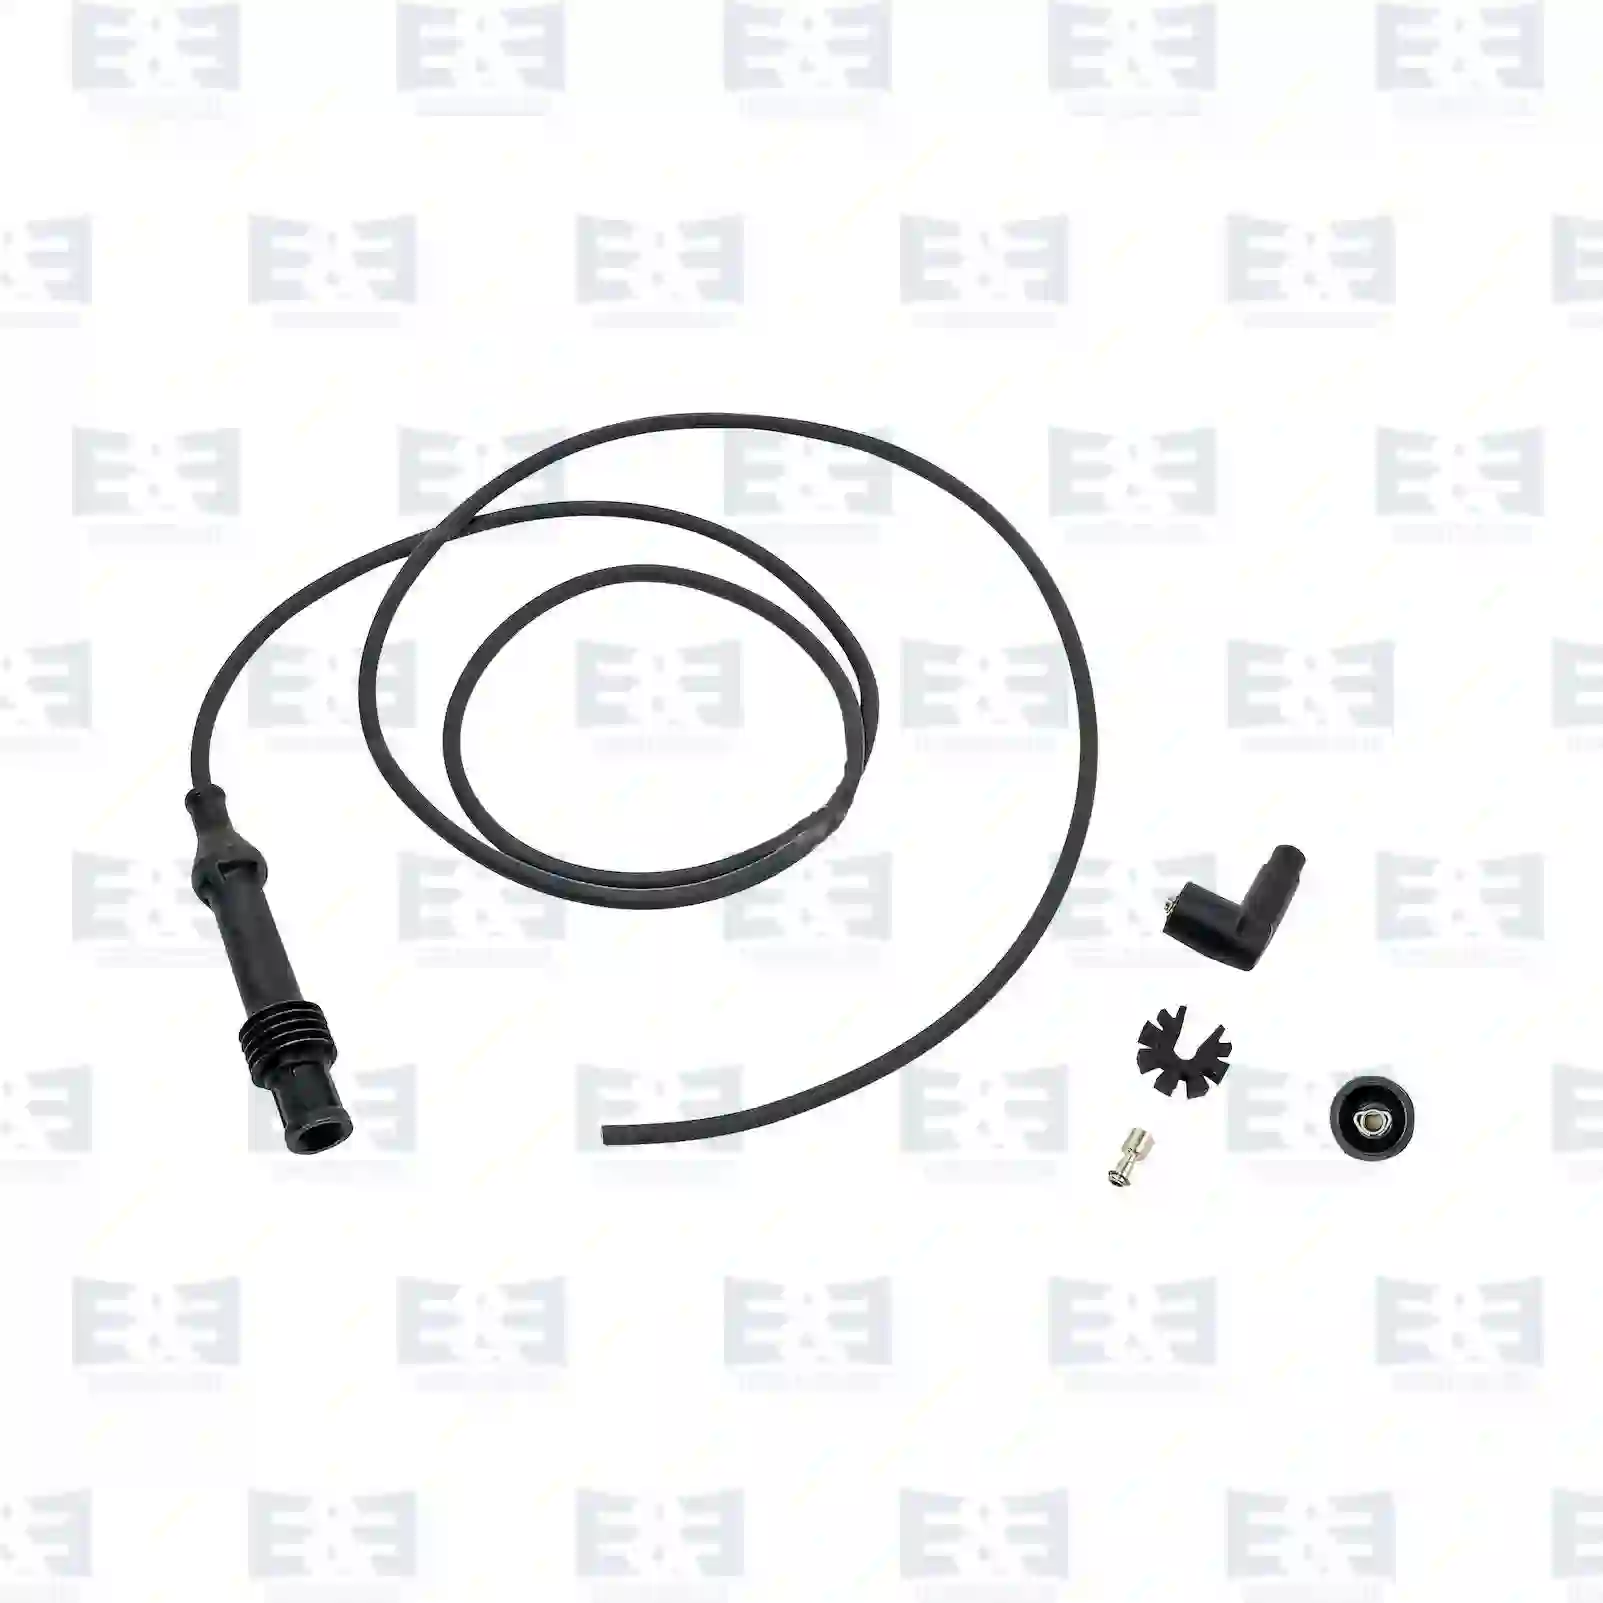  Ignition cable || E&E Truck Spare Parts | Truck Spare Parts, Auotomotive Spare Parts